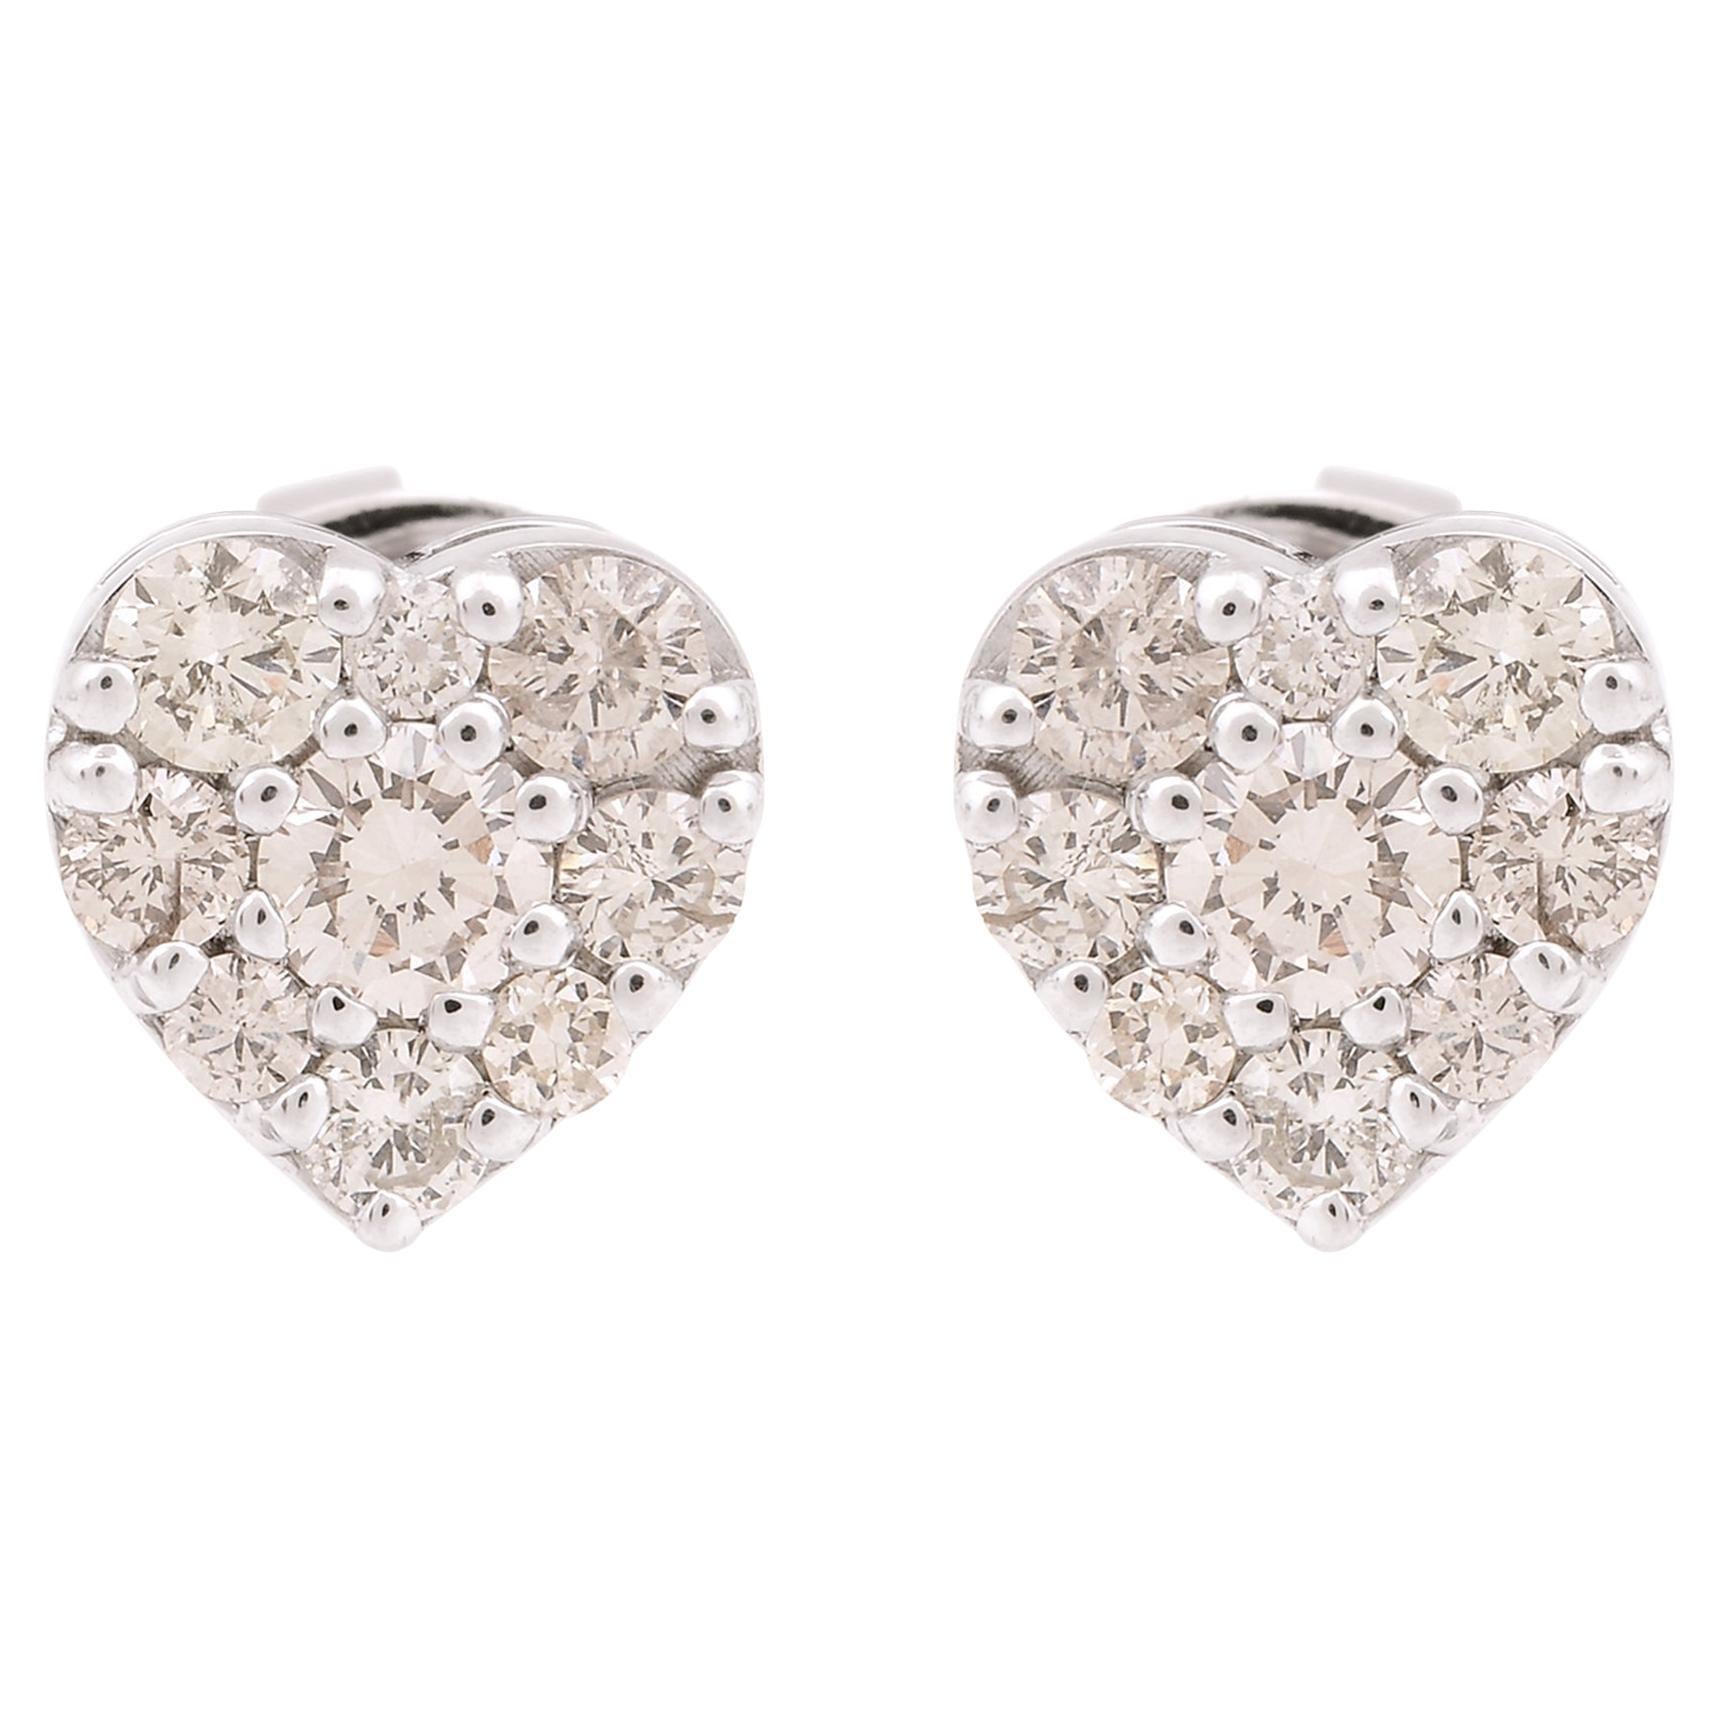 0.85 Carat Diamond Pave Heart Shape Stud Earrings Solid 10k White Gold Jewelry